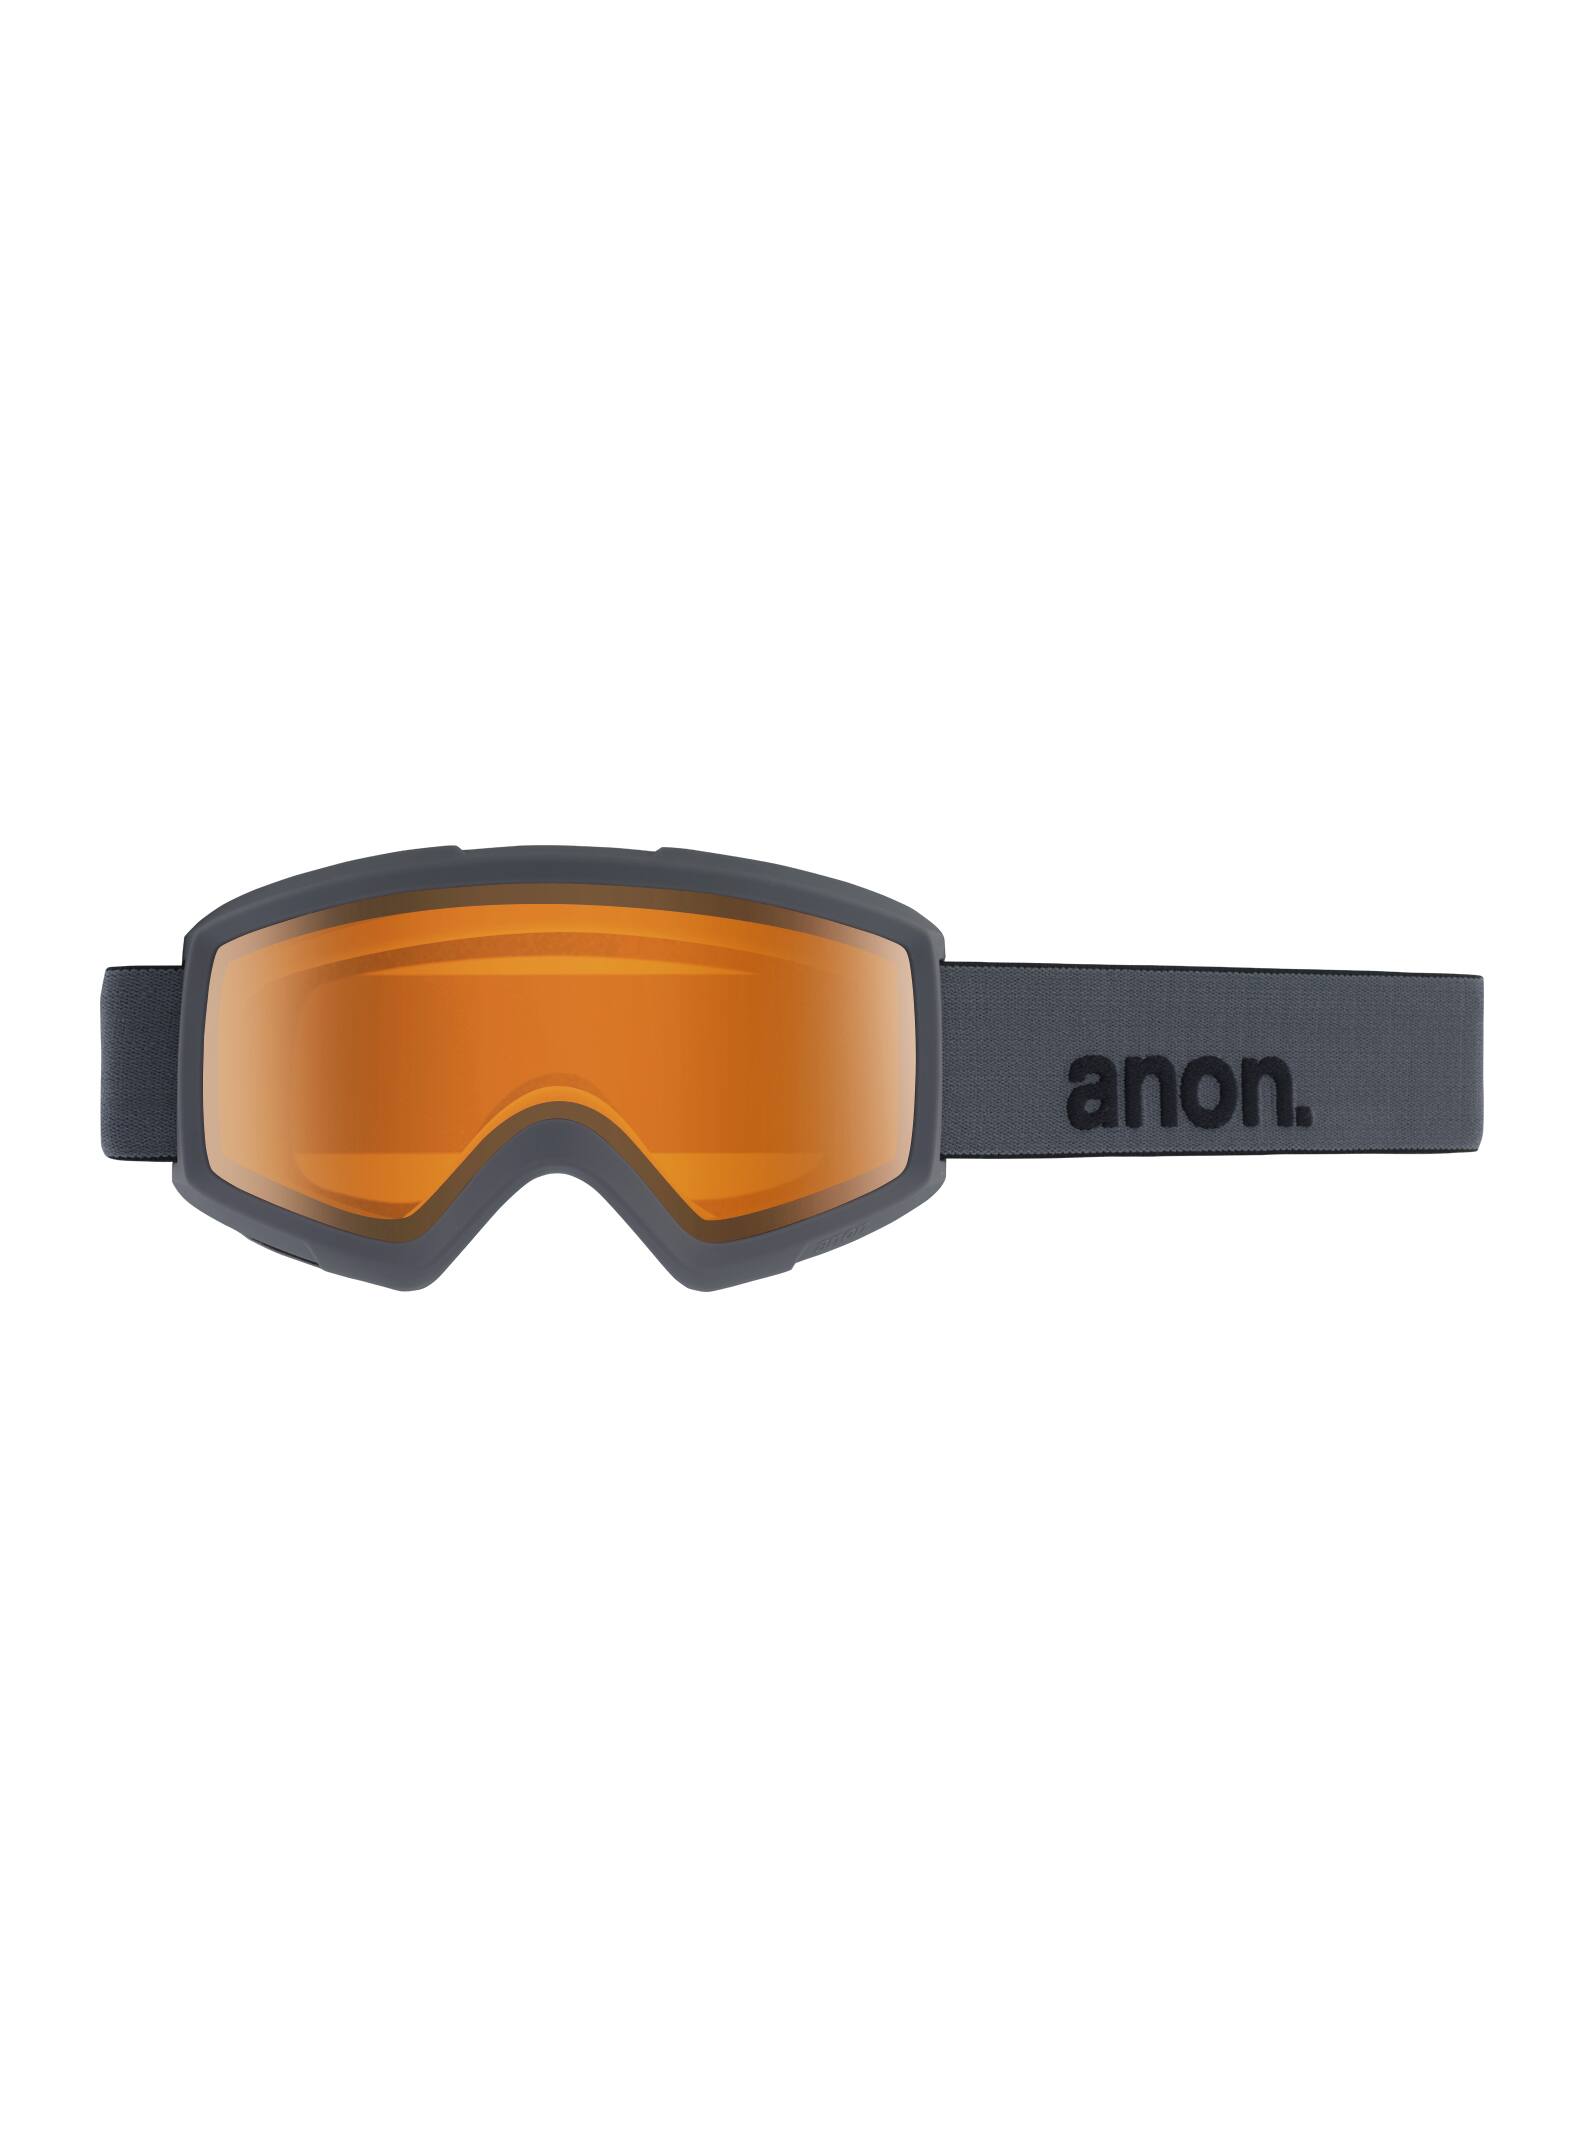 Anon Helix NON Mirror Snowboardbrille Skibrille 